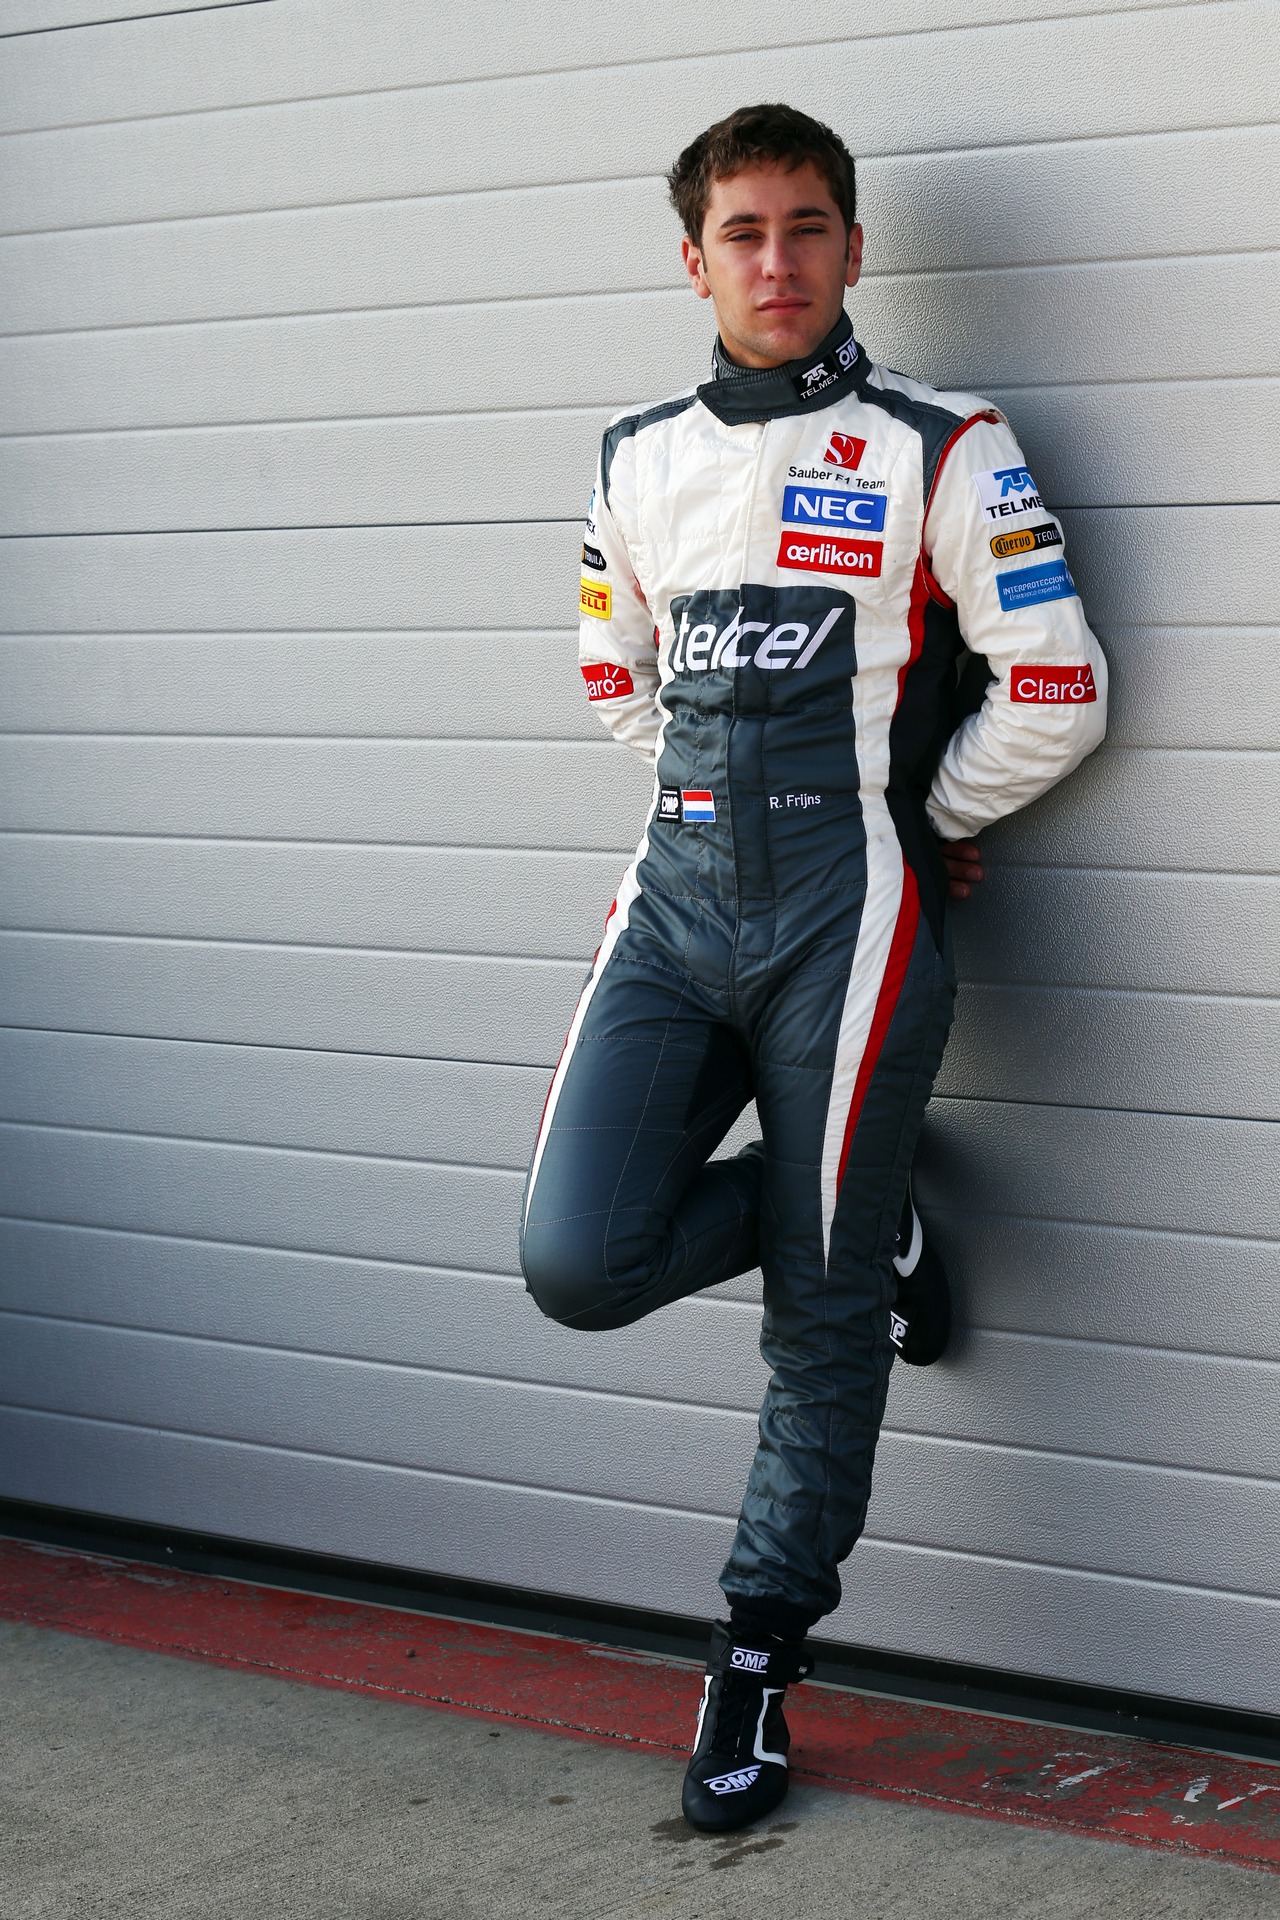 Robin Frijns (NLD) Sauber Test and Reserve Driver.
